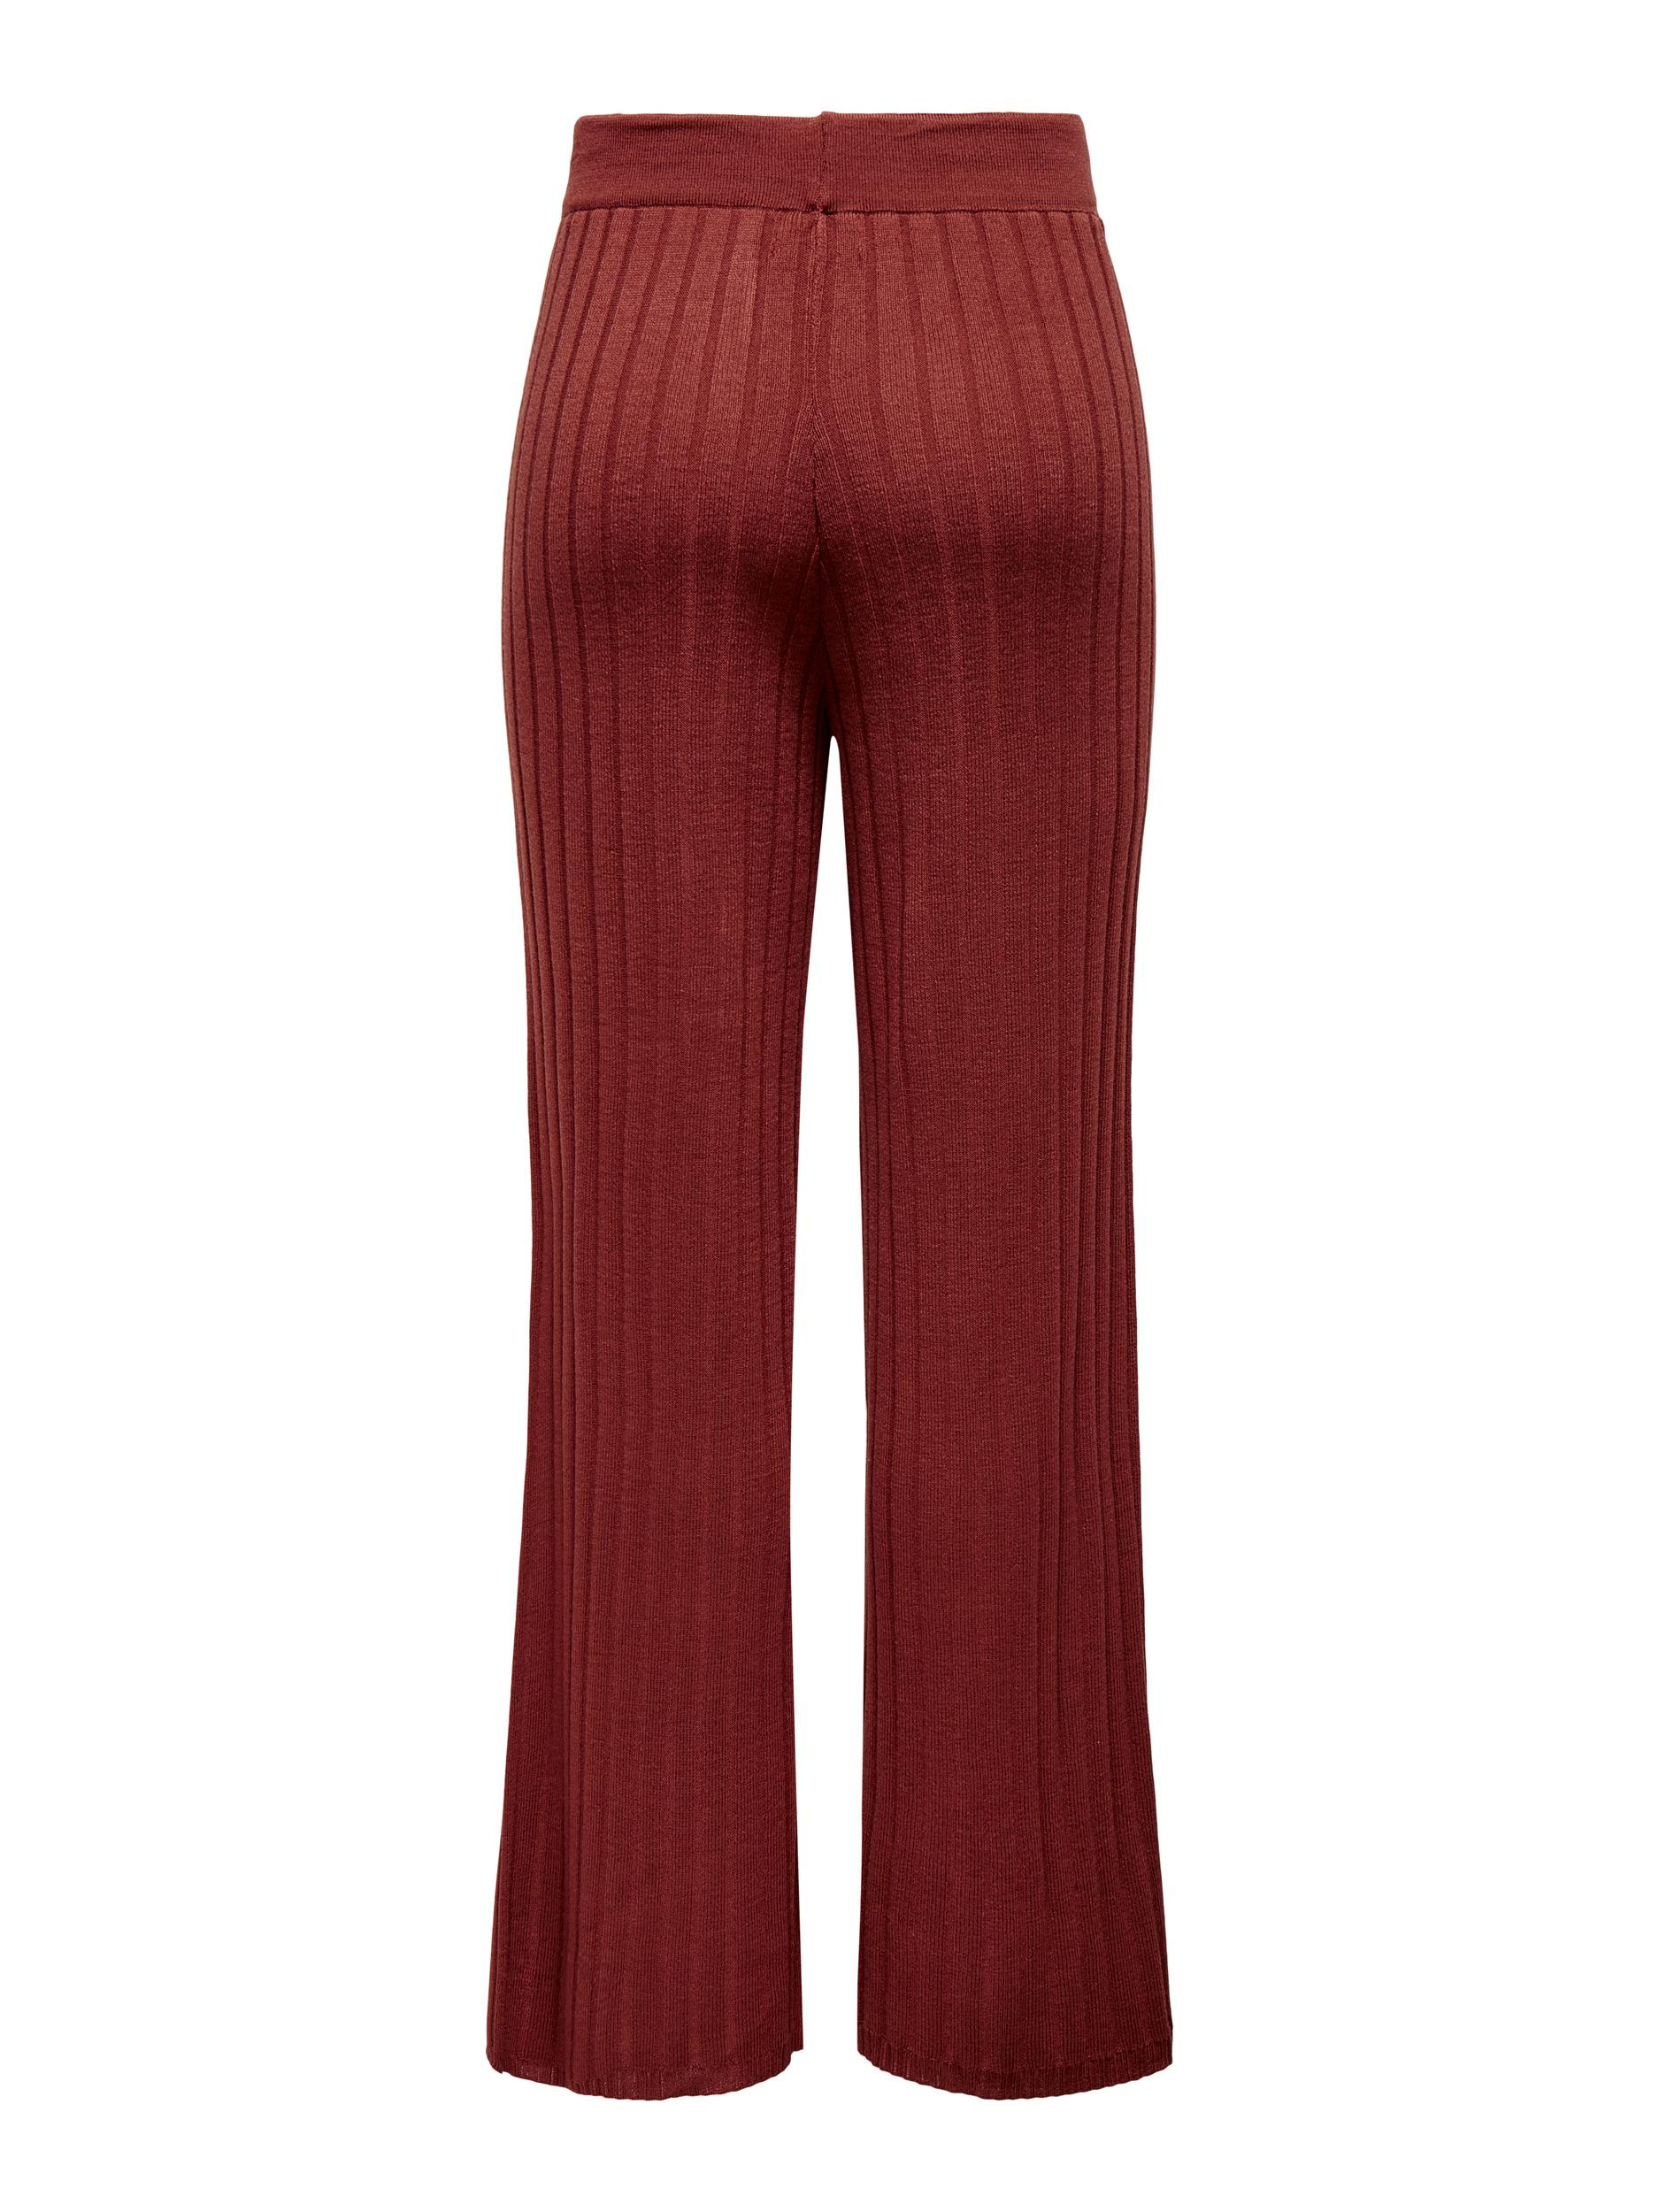 Pantaloni a vita alta, Rosso, large image number 1